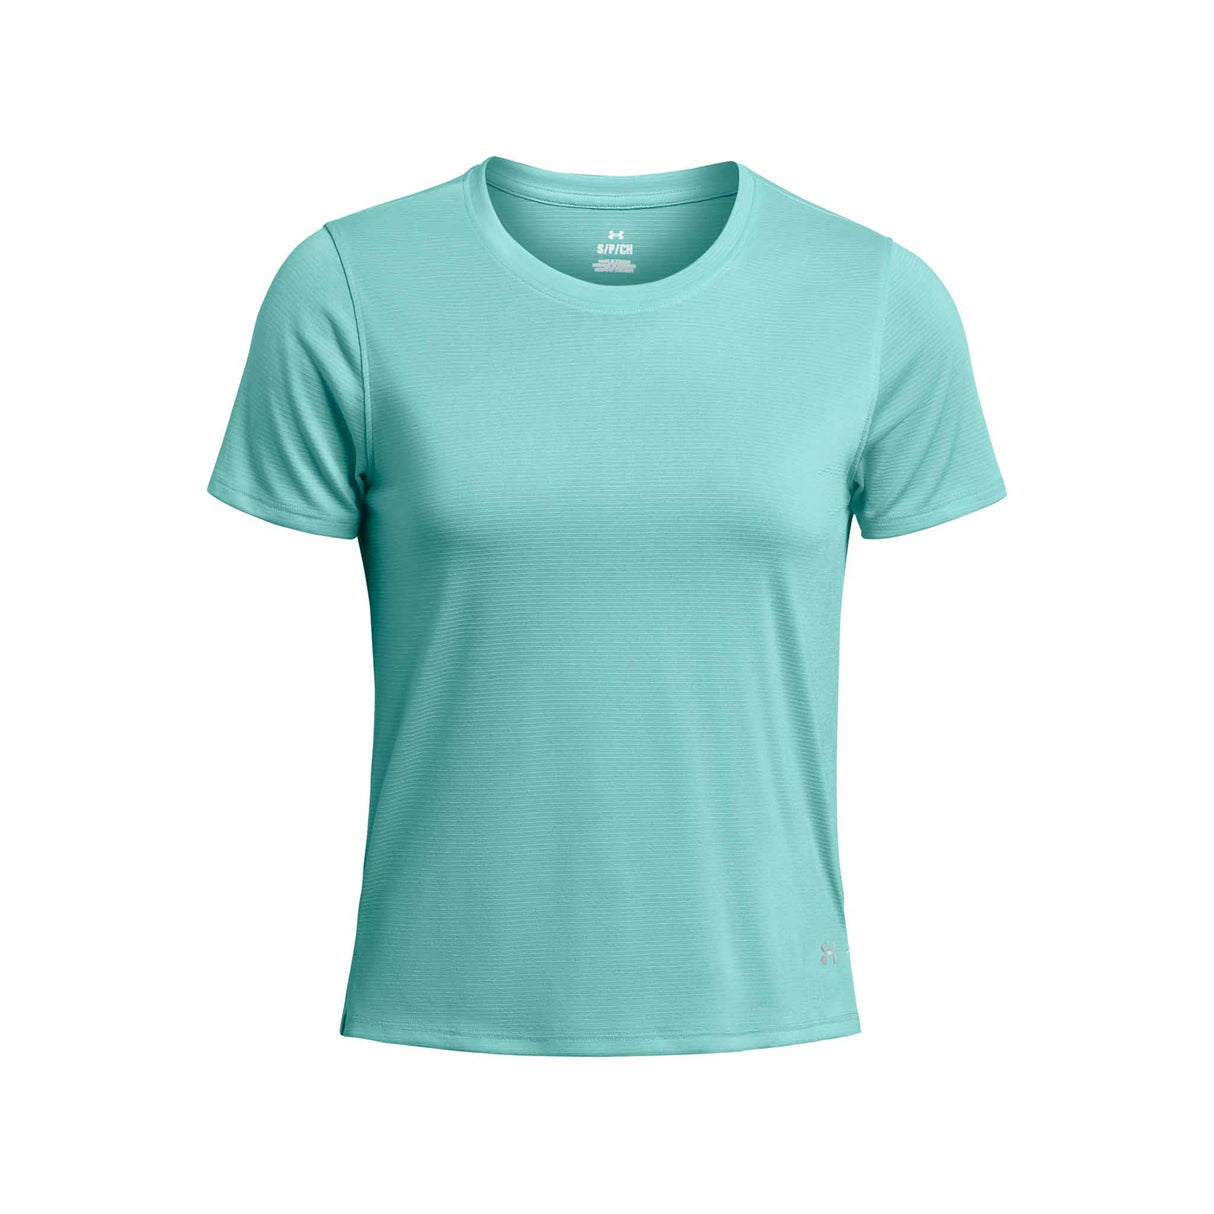 Under Armour Launch t-shirt à manches courtes femme - Radial Turquoise / Reflective